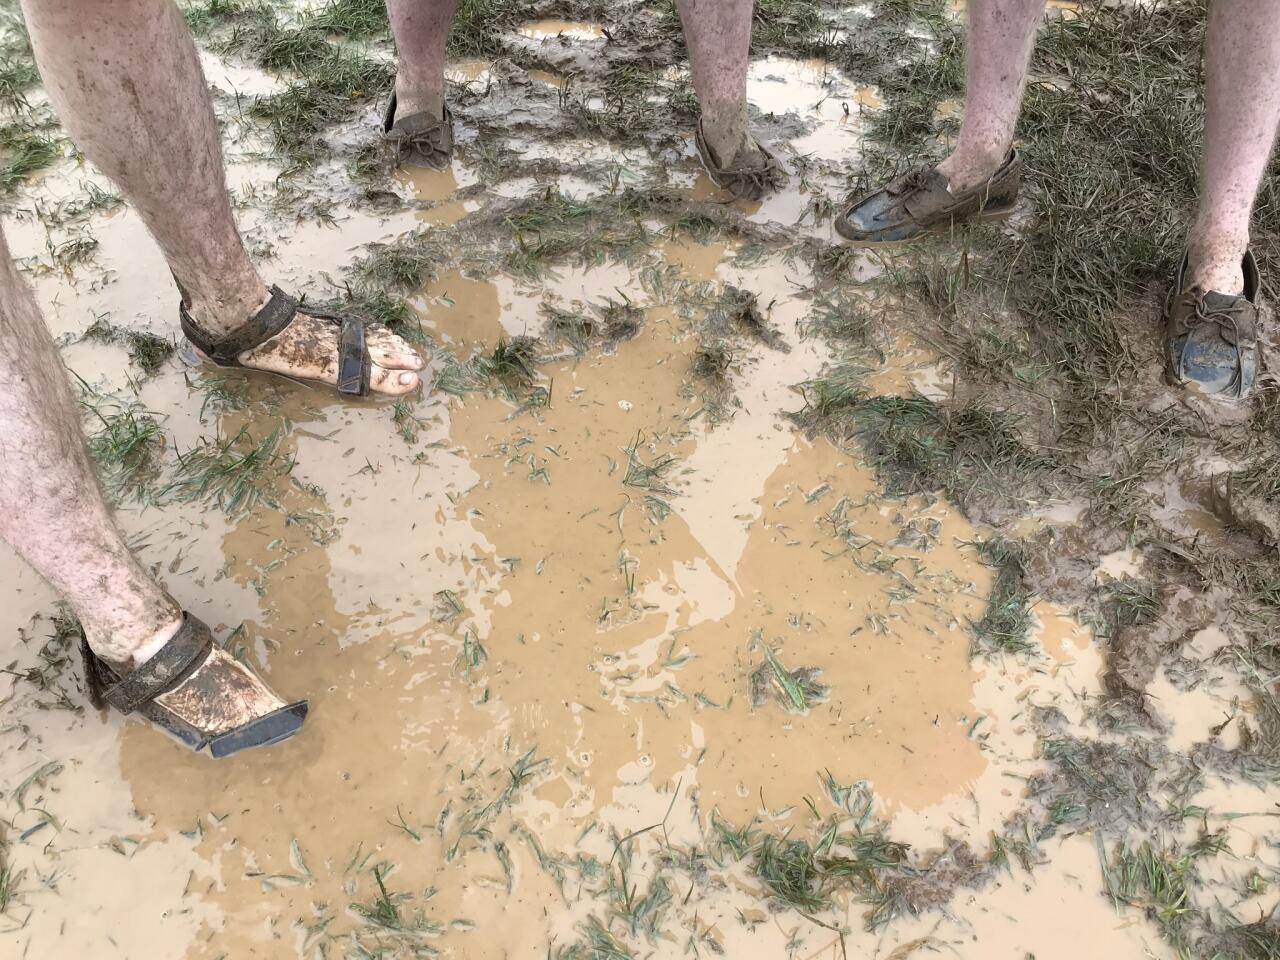 Muddy infield